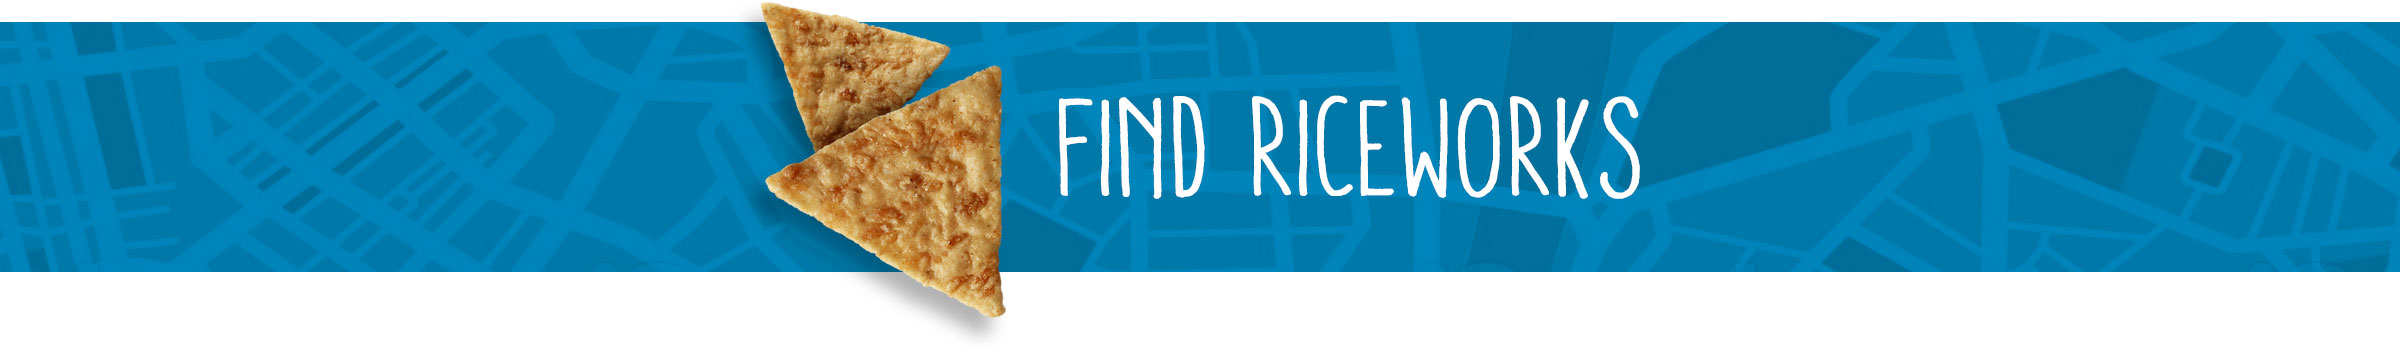 Find Riceworks